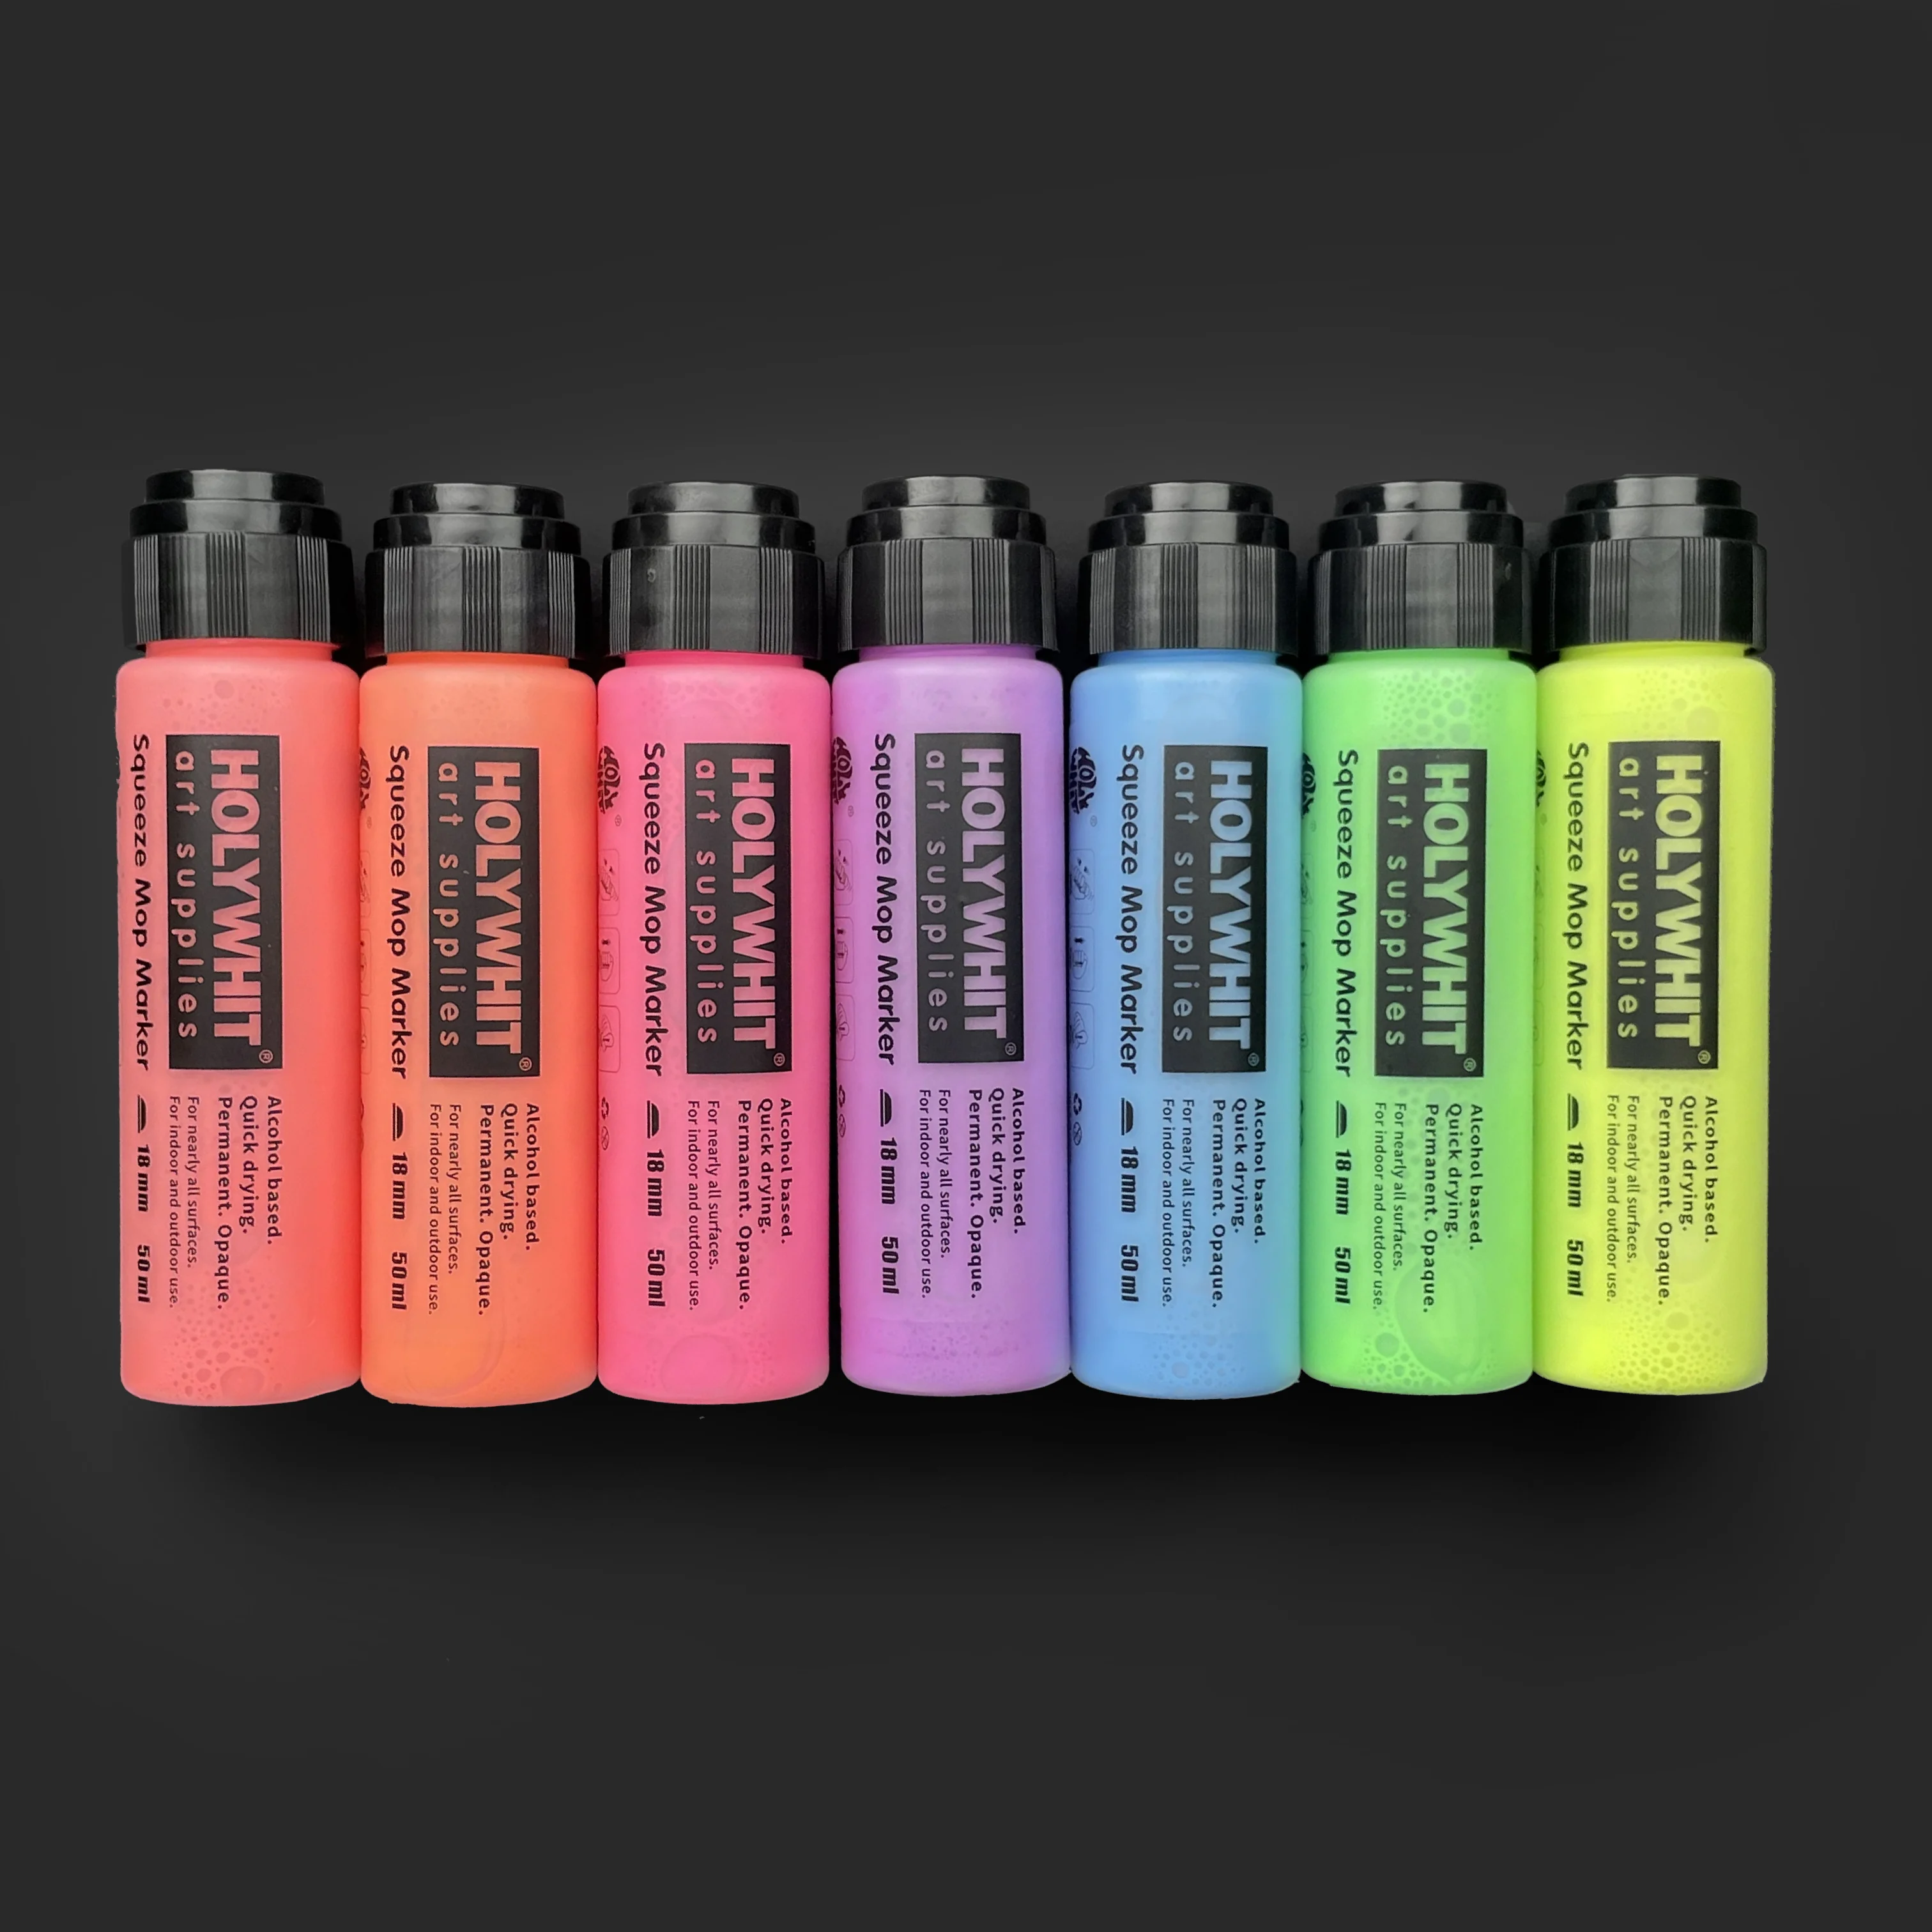 

28 Color Graffiti round head fluorescent pen paint pen 18mm/50ml oil-based waterproof Marking pen, replaceable ink, Art supplies